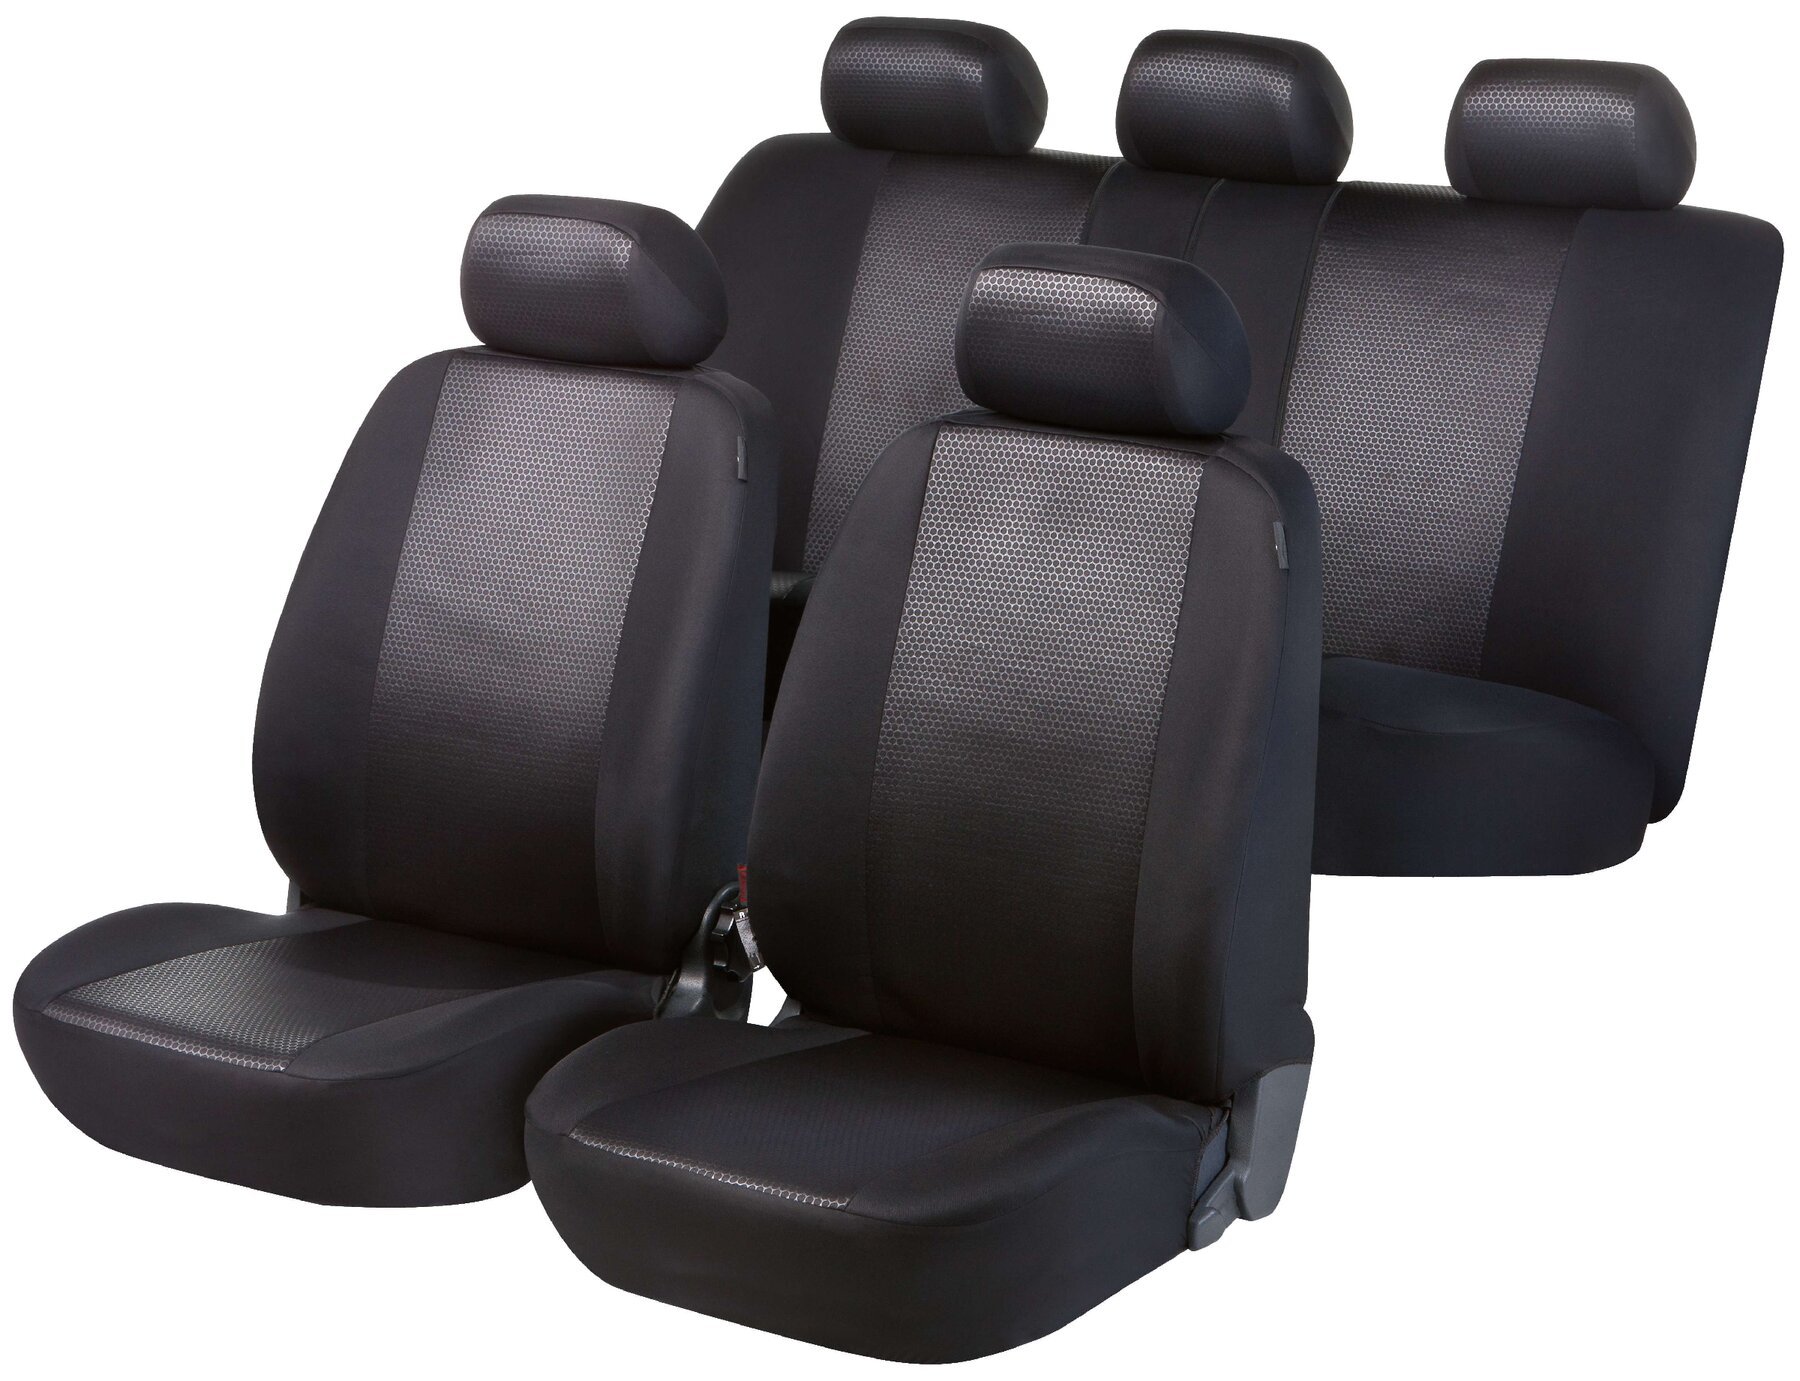 Autositzbezug Shiny schwarz komplett Set für Vordersitze und Rückbank